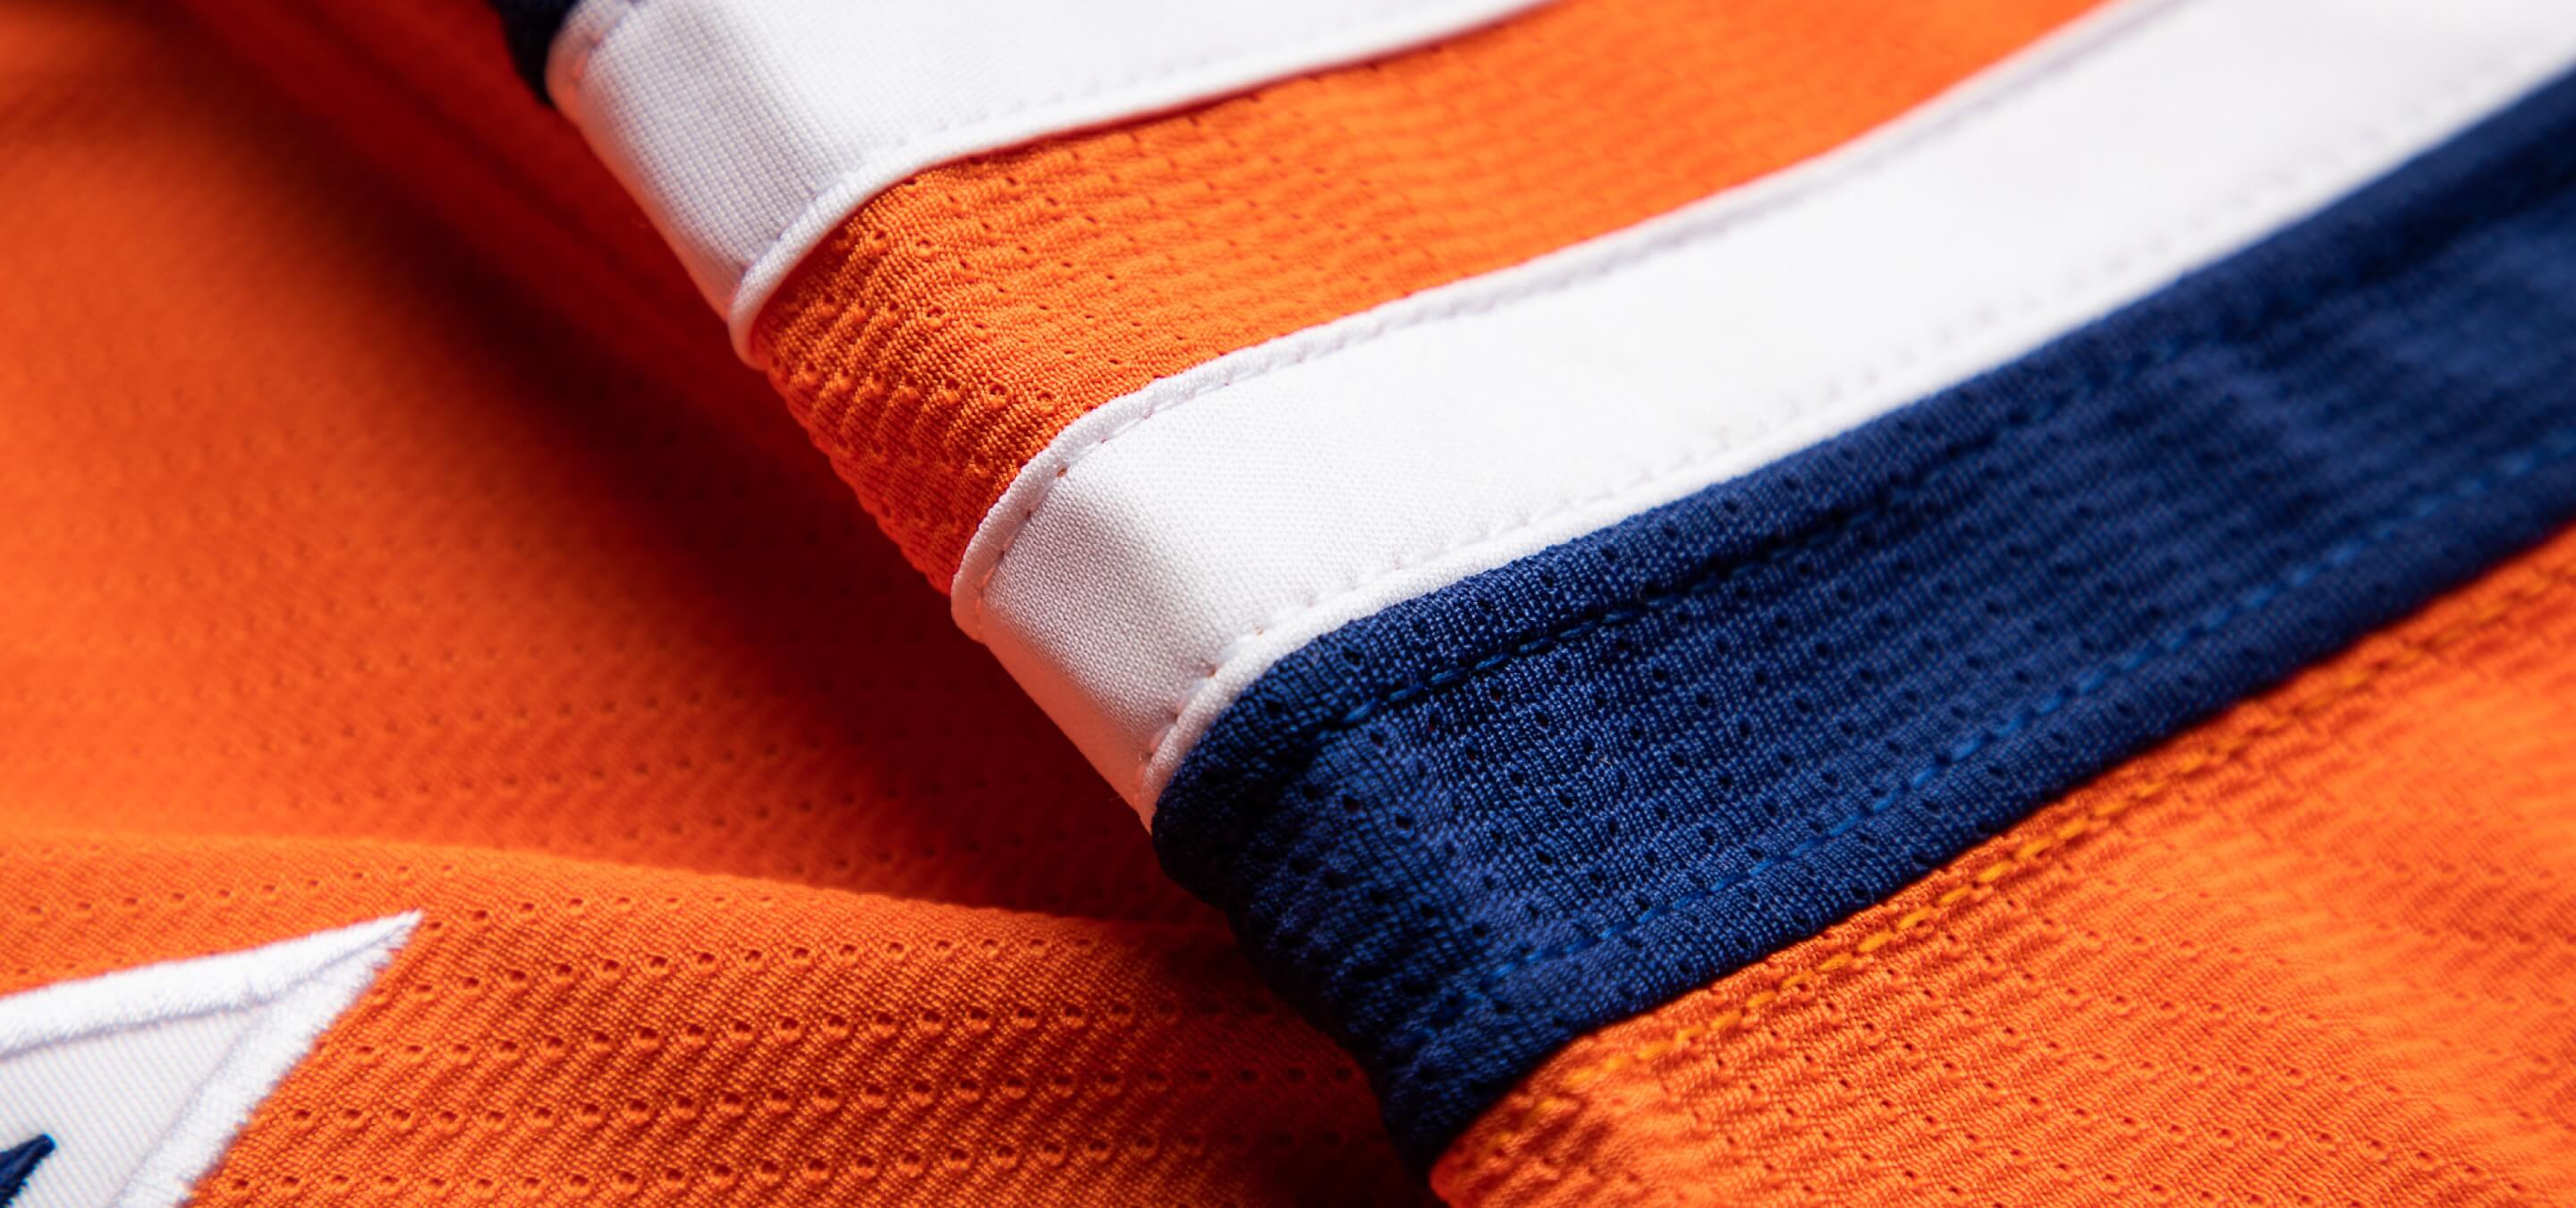 Closeup view on hockey jersey sleeve texture